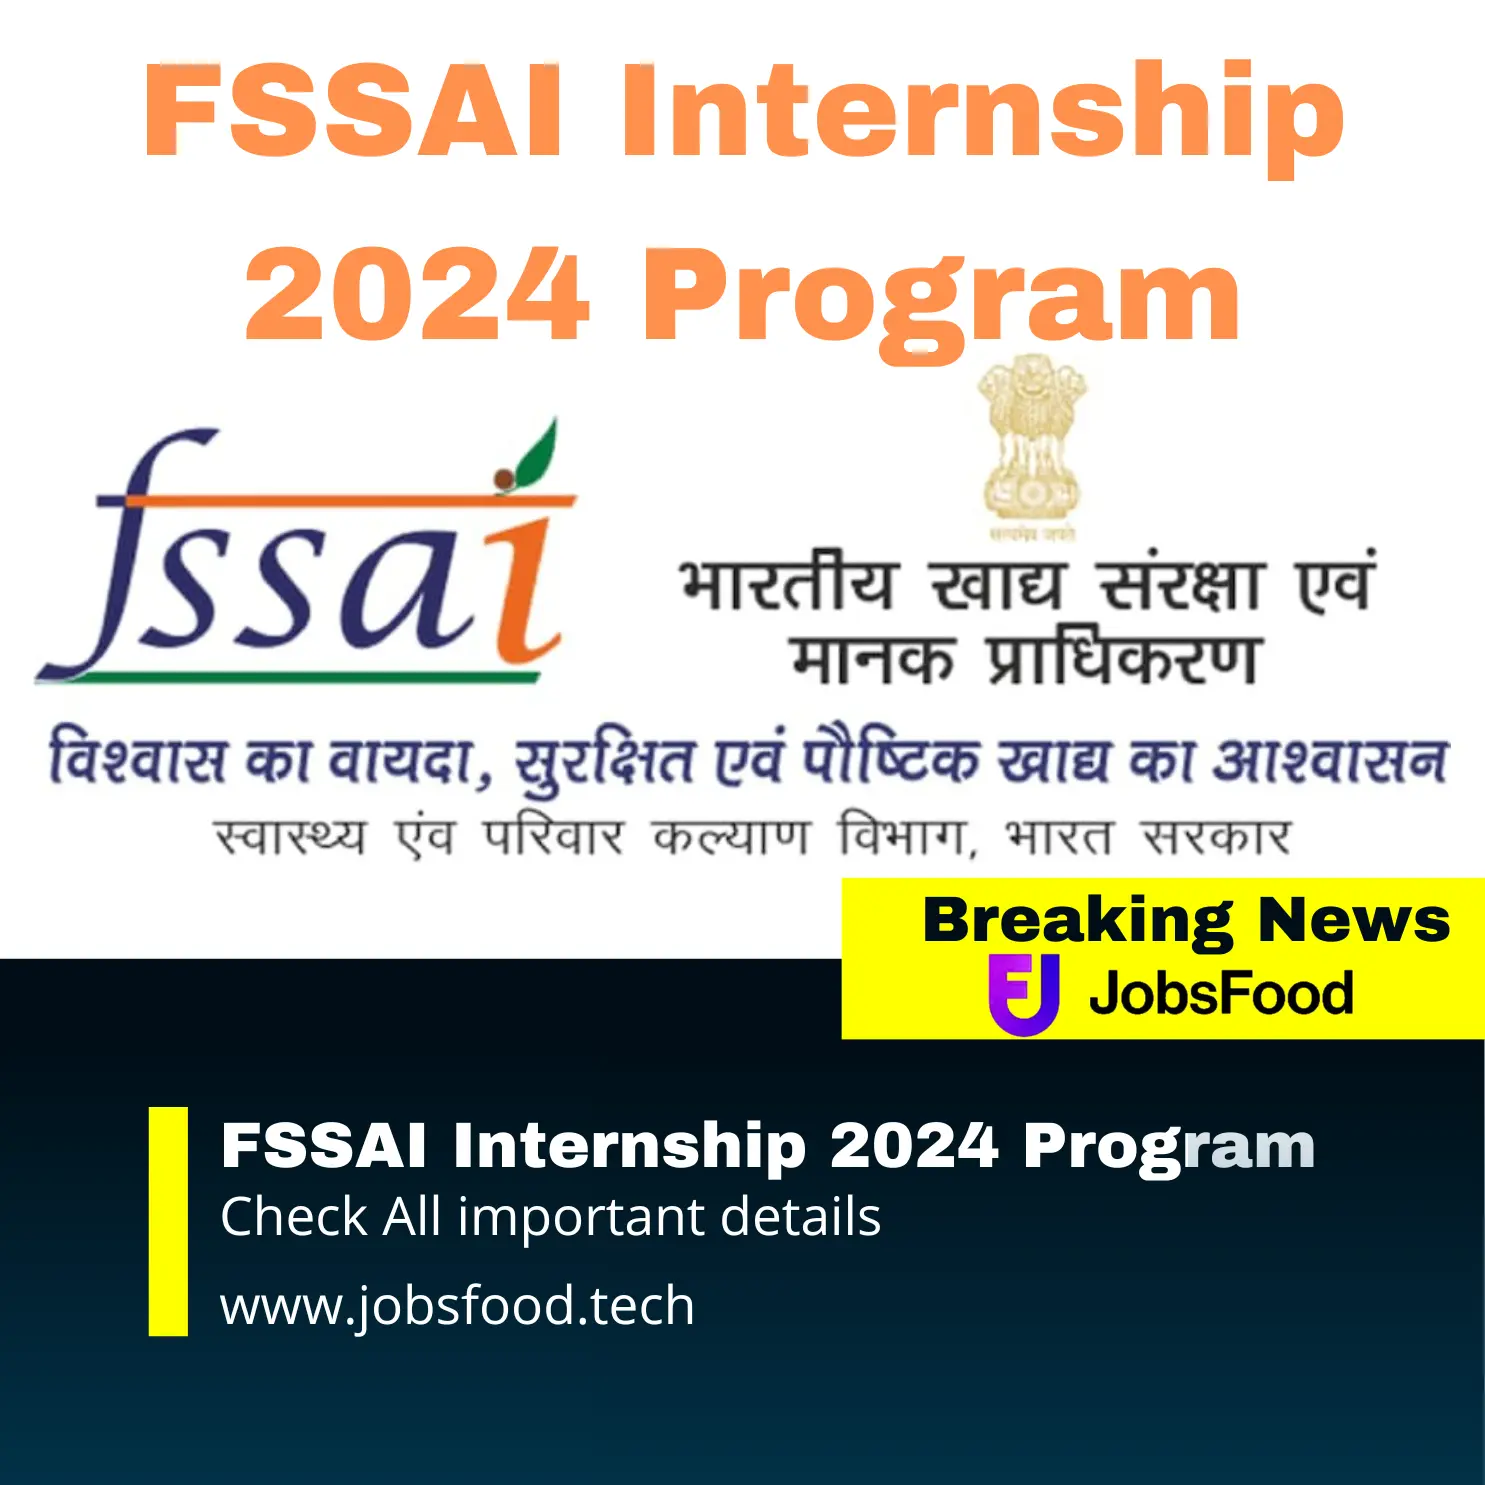 FSSAI Internship Program 2024 